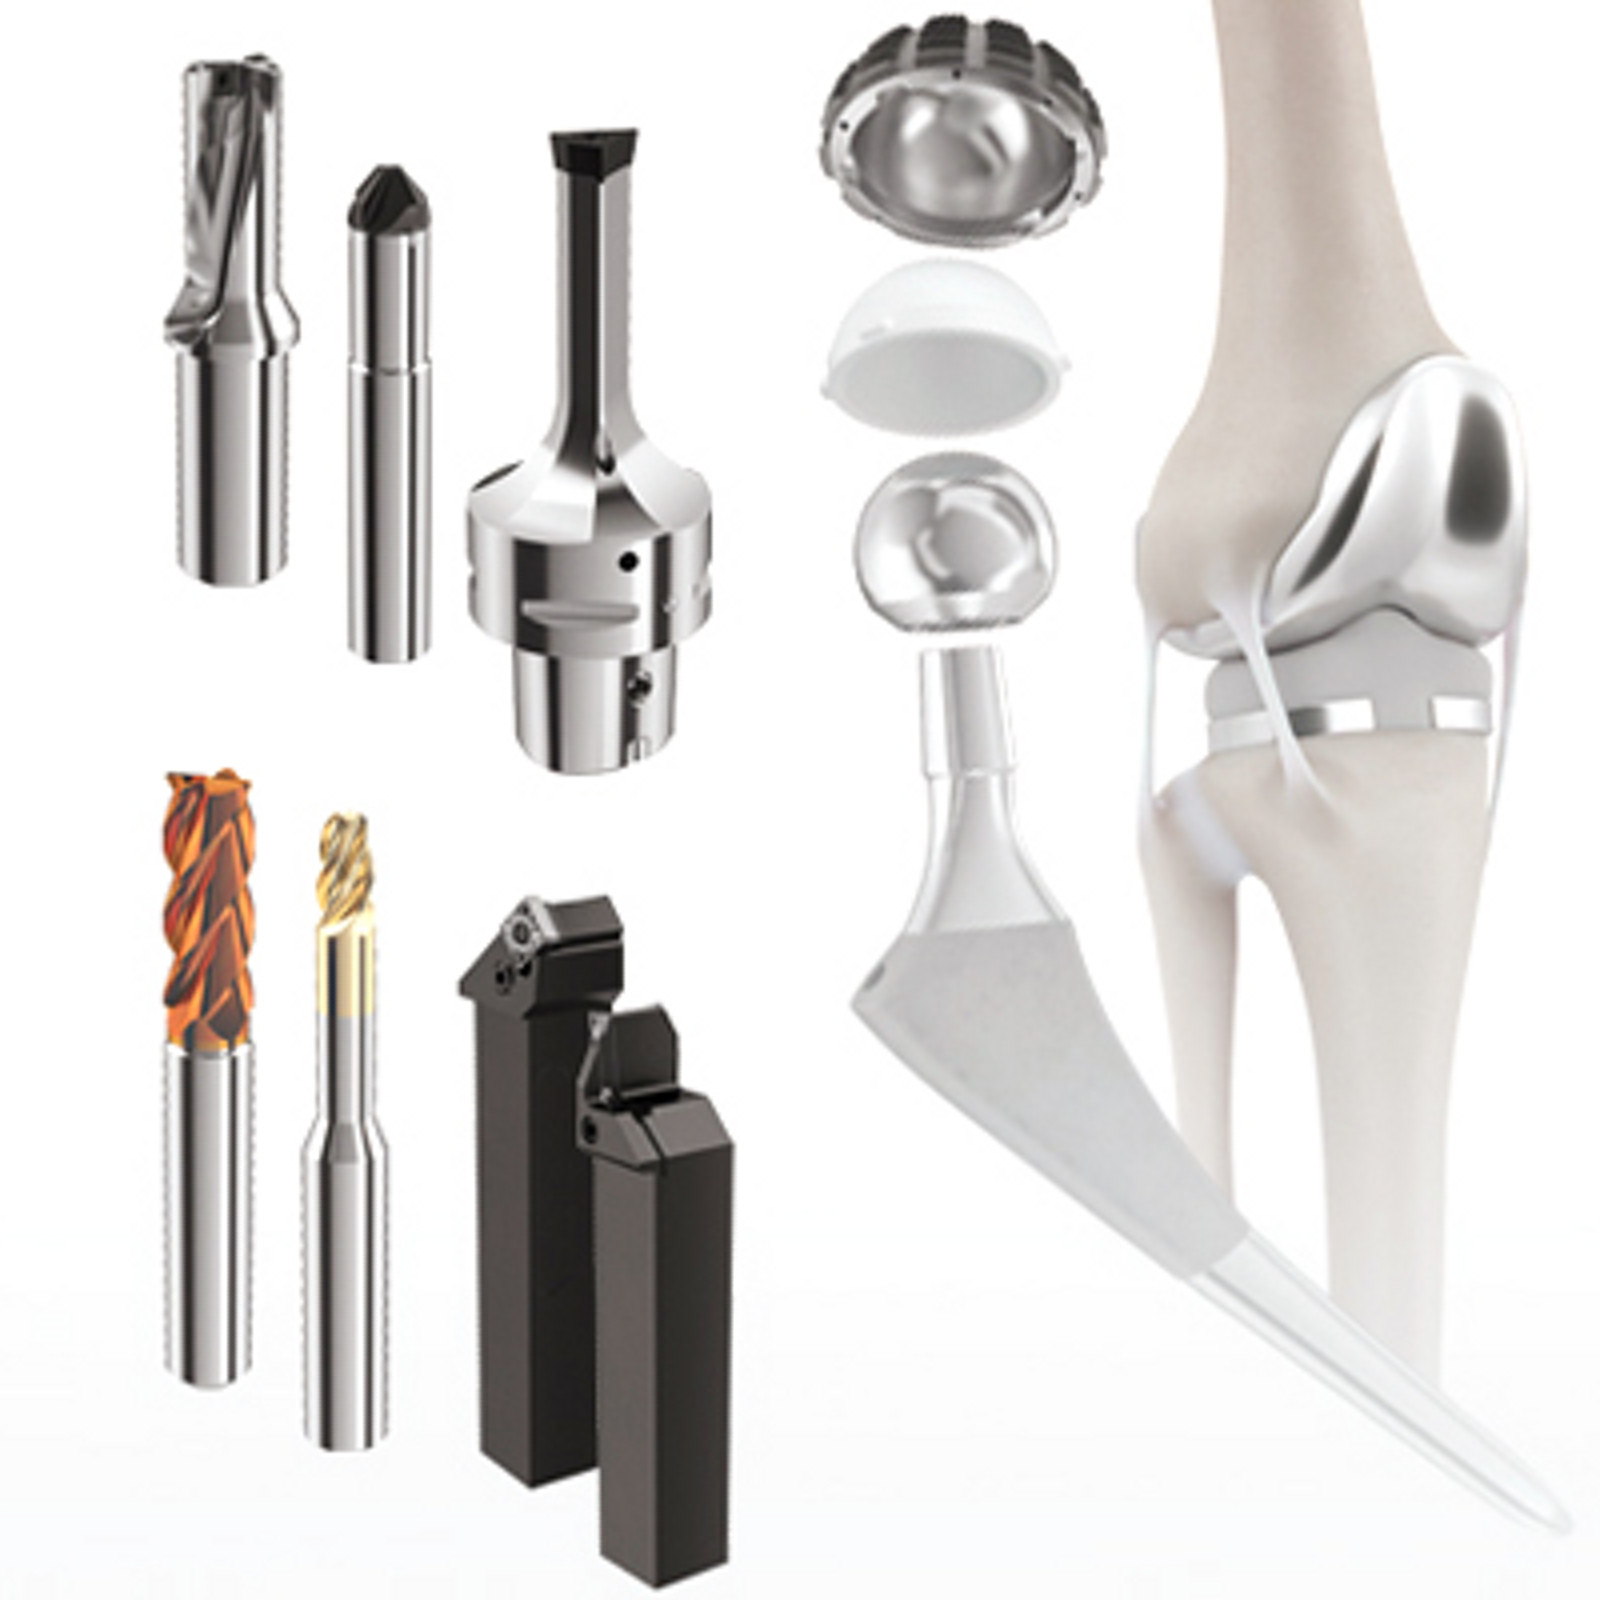 Cutting Tool Solutions für medizintechnische Komponenten